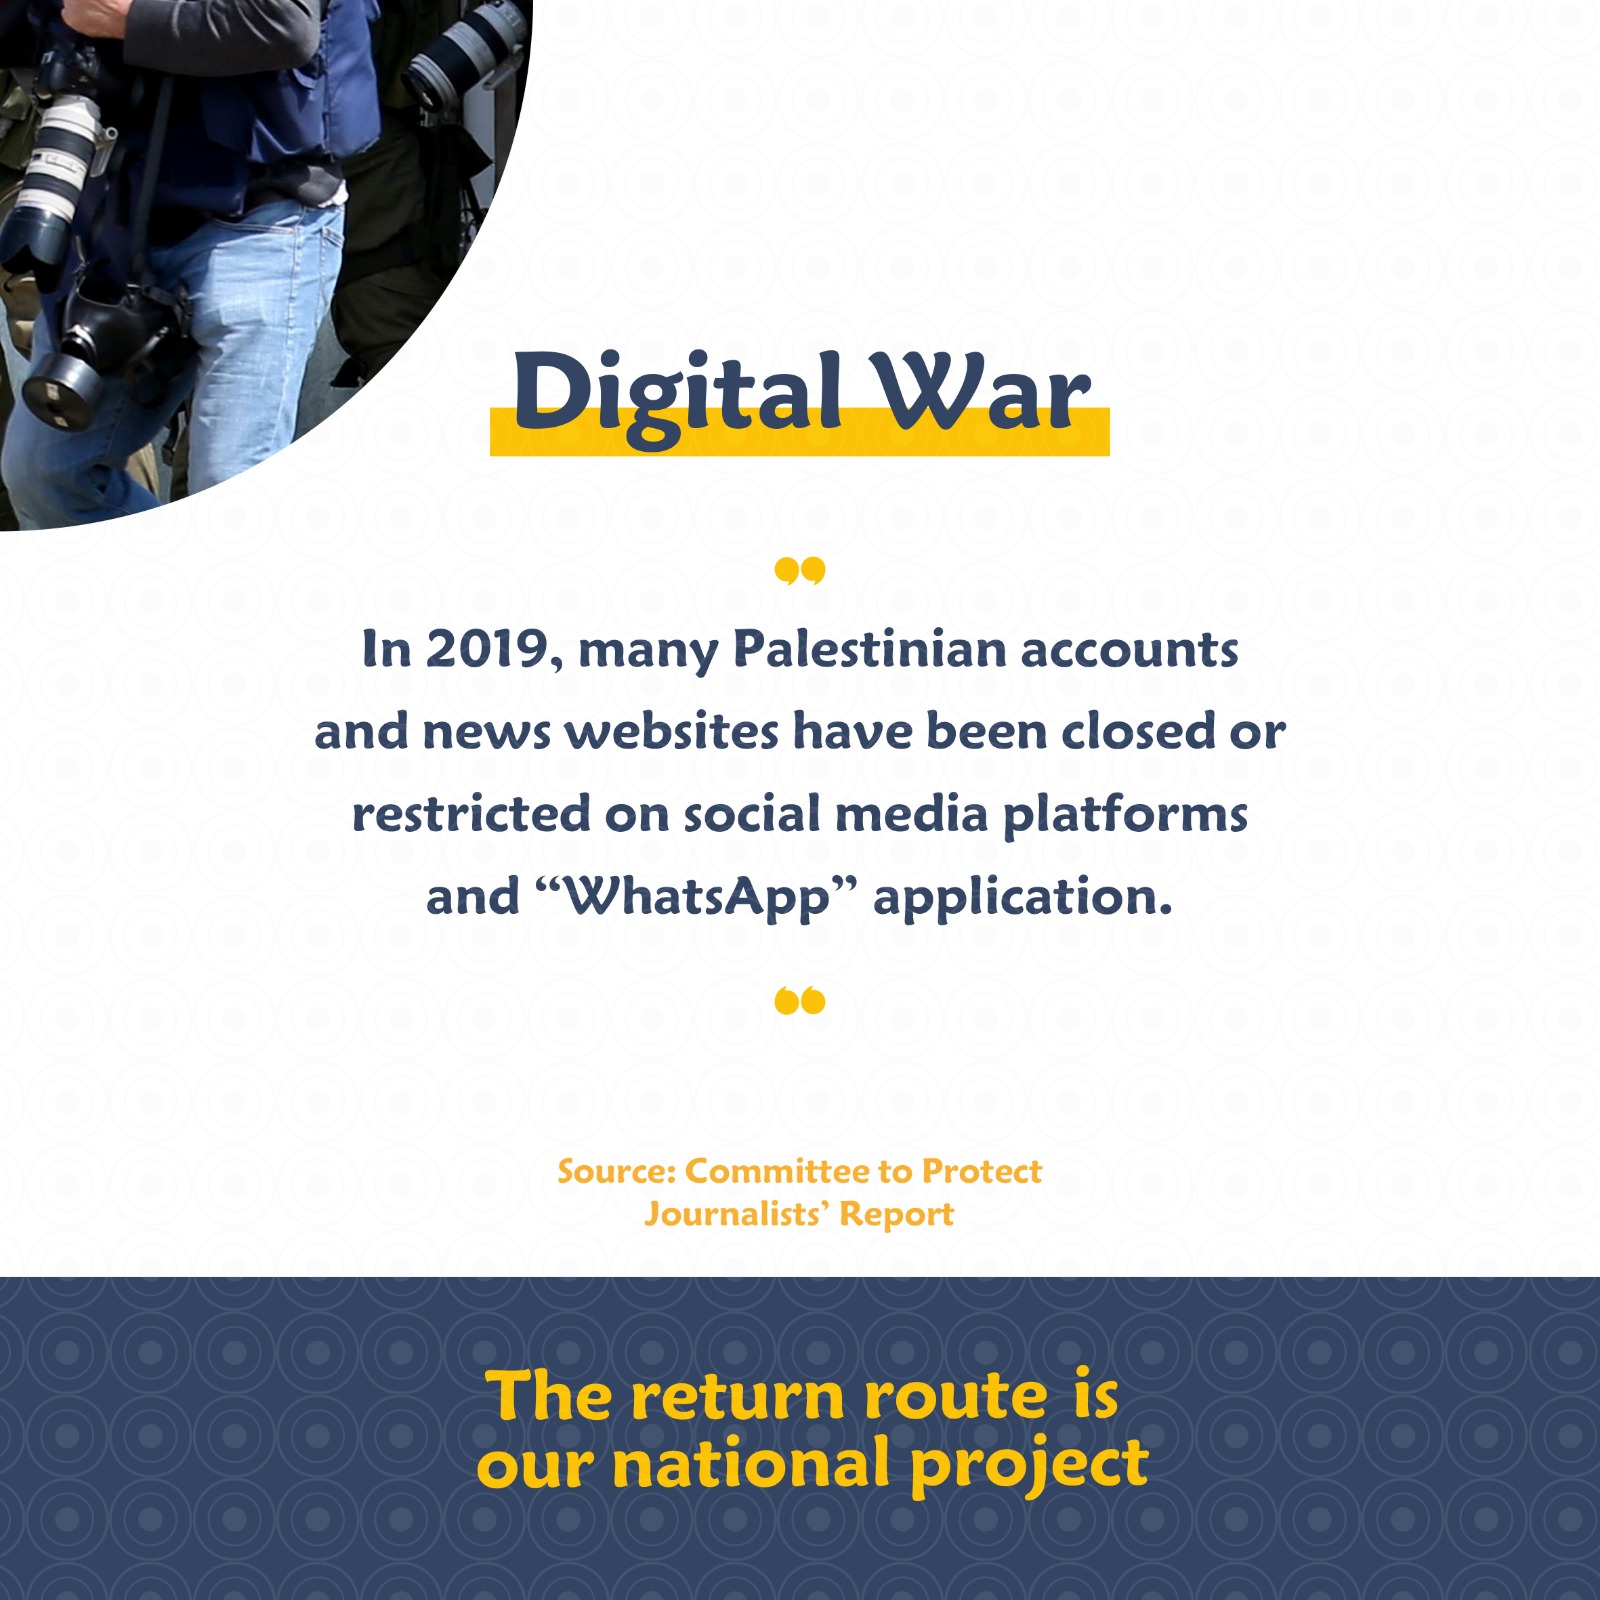 "Digital War"